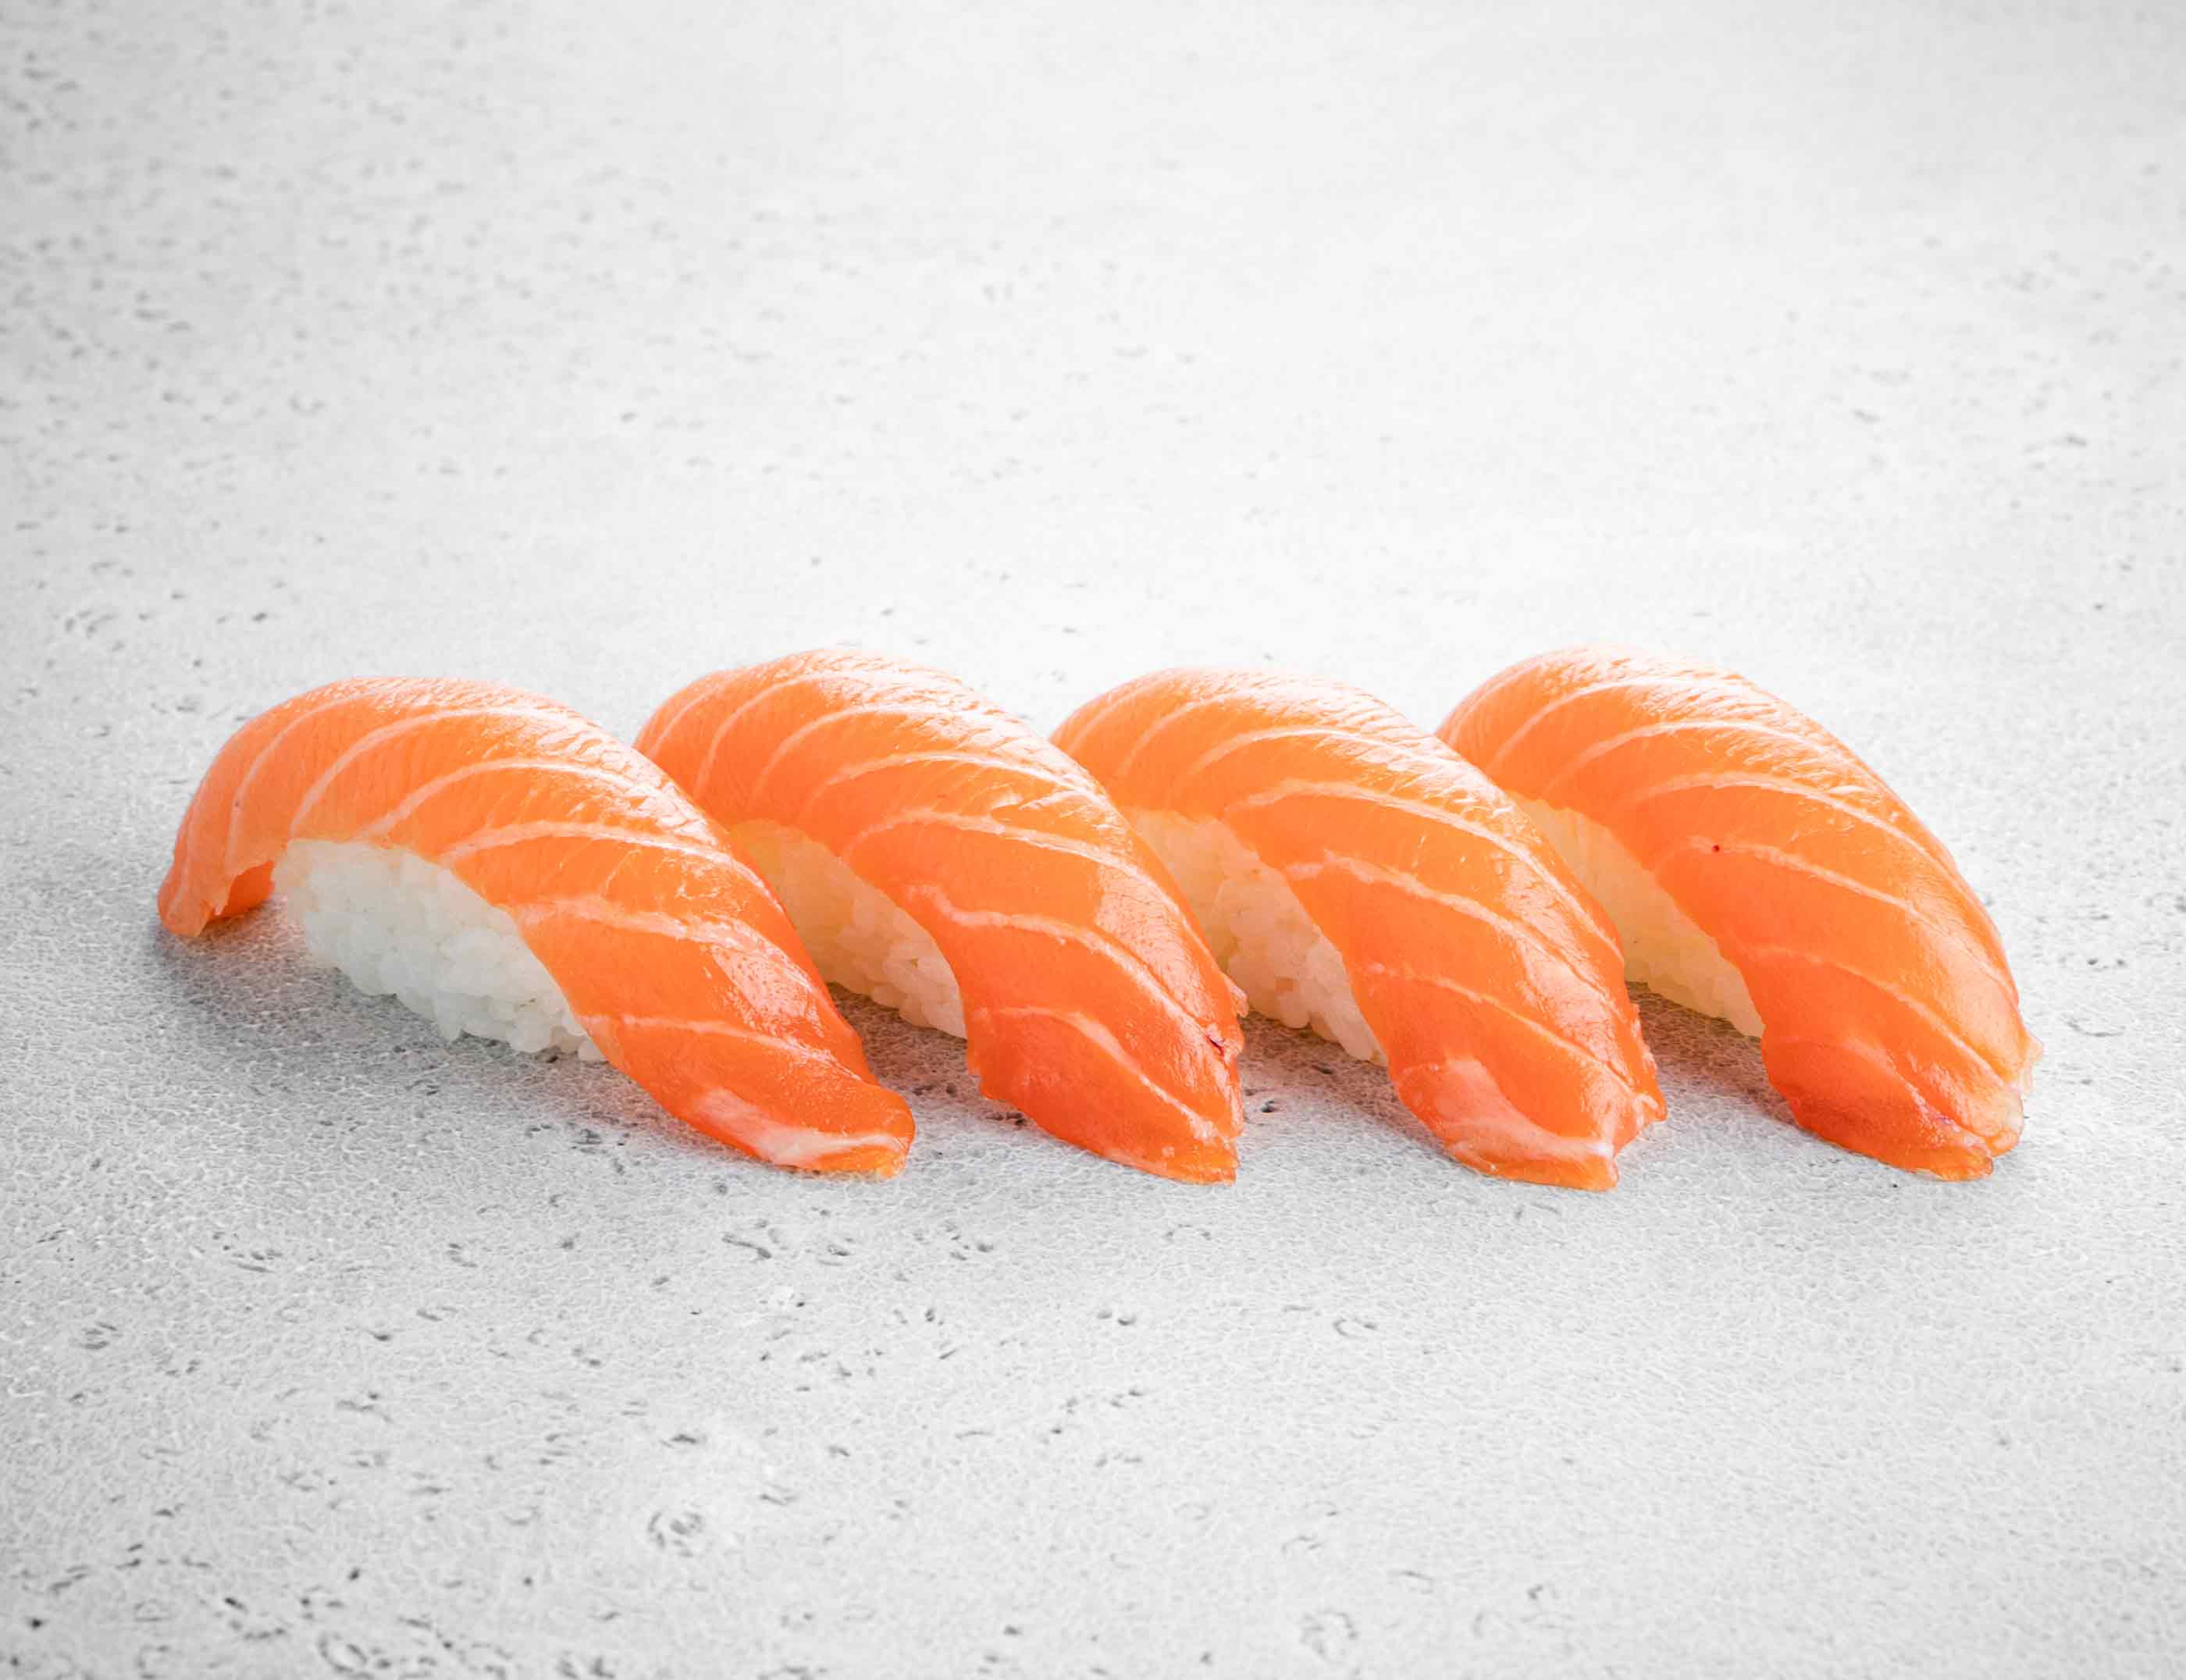 суши острые с лососем 4 шт Суши с лососем (4 шт)